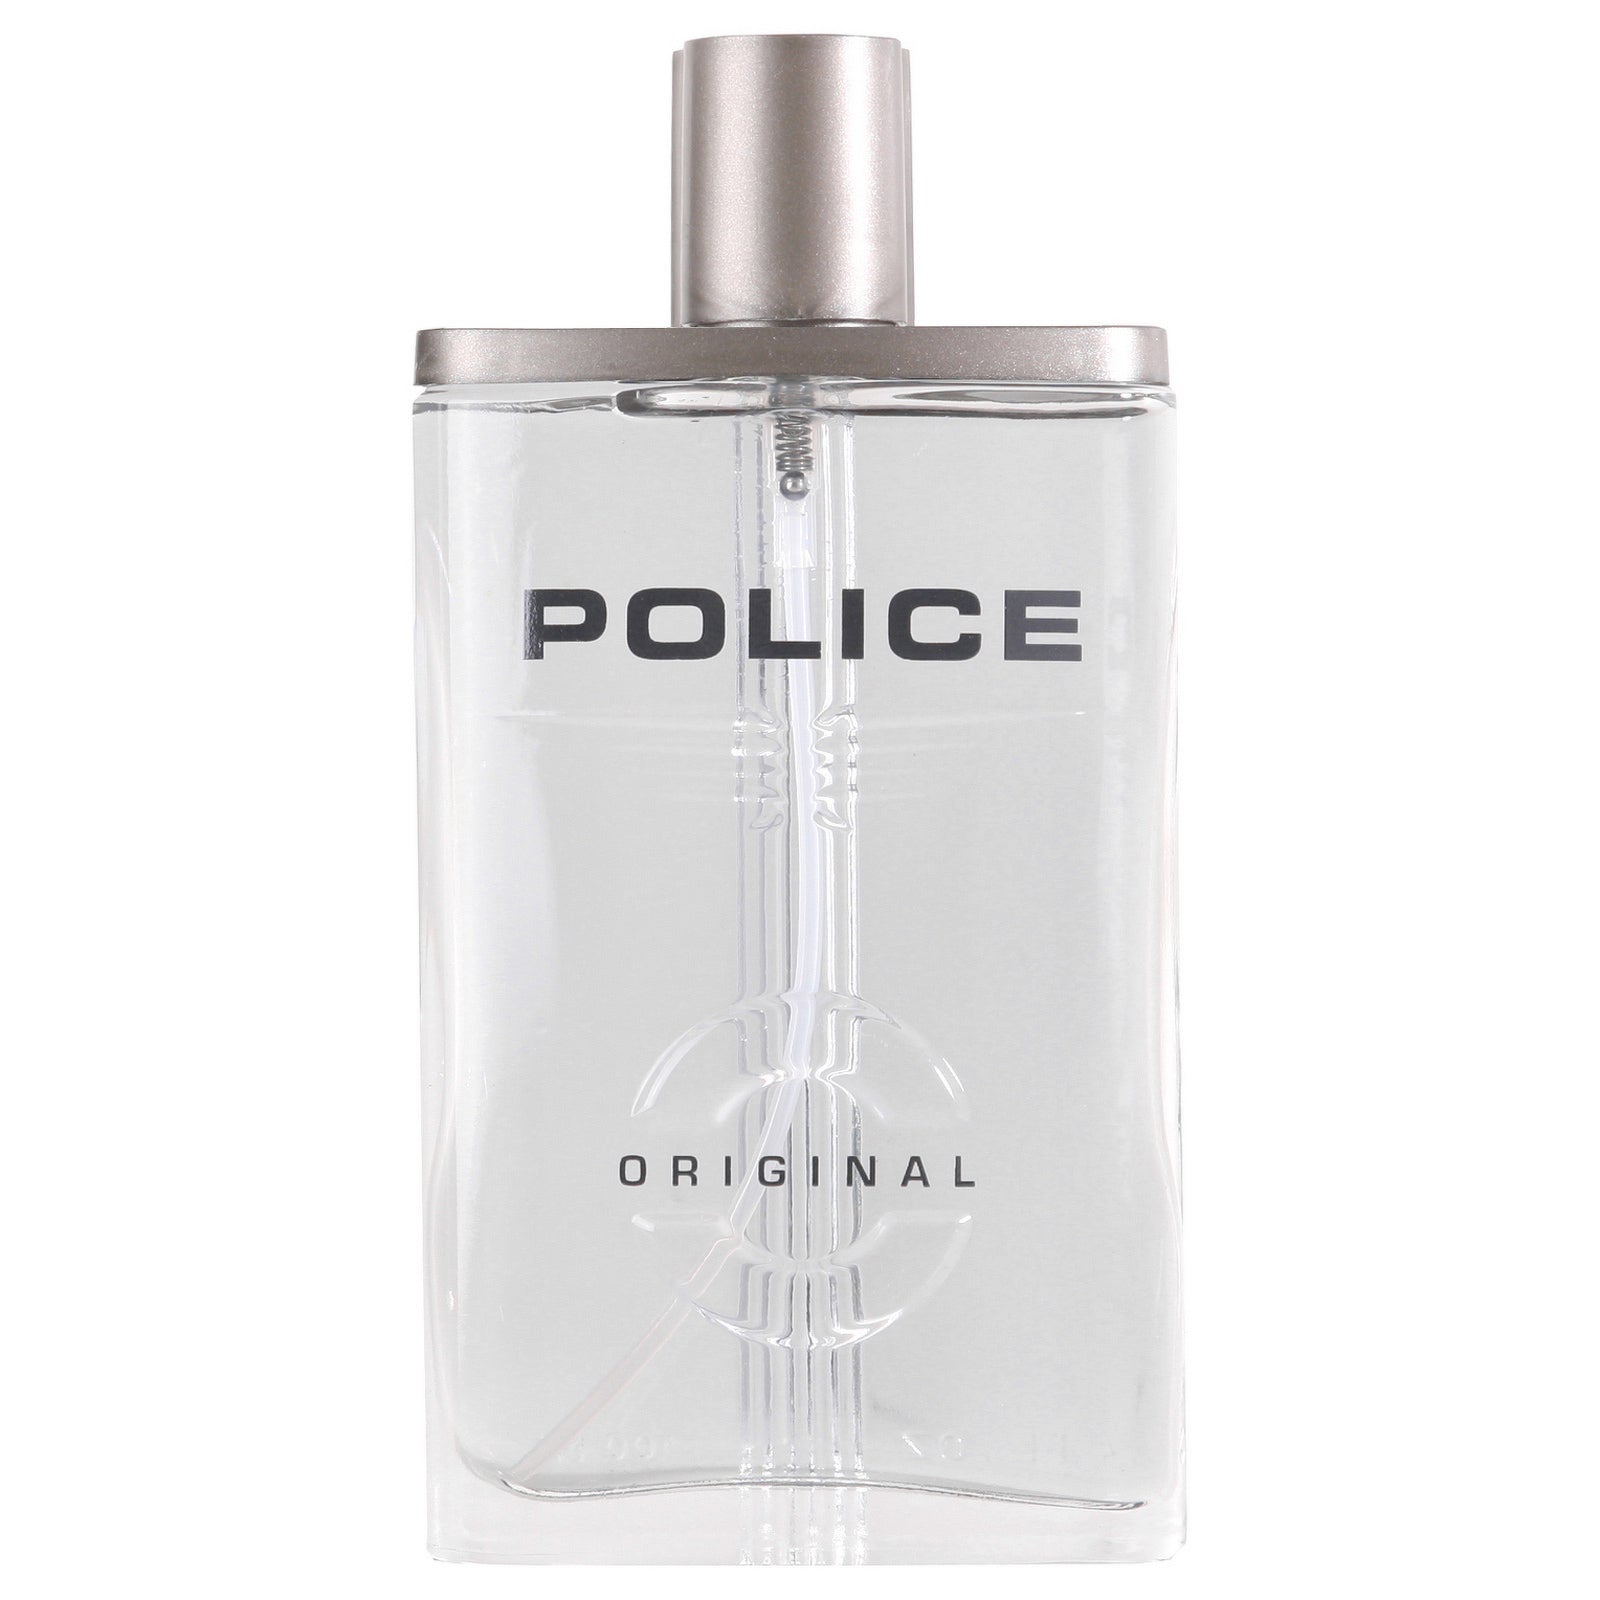 Police Original Eau de Toilette Spray 100ml - Feel Gorgeous